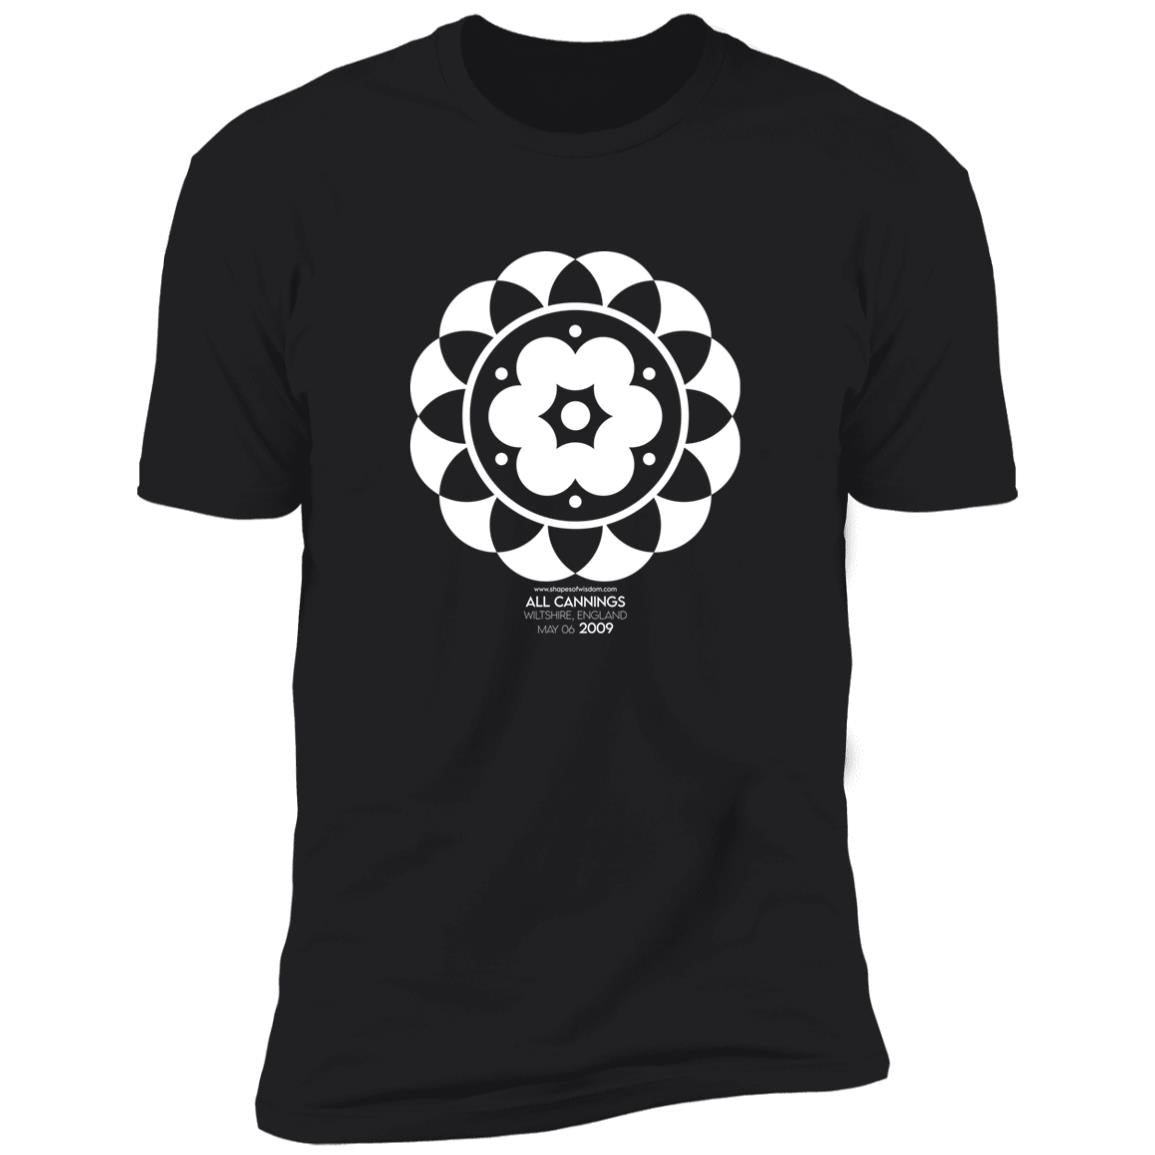 Crop Circle Premium T-Shirt - All Cannings 3